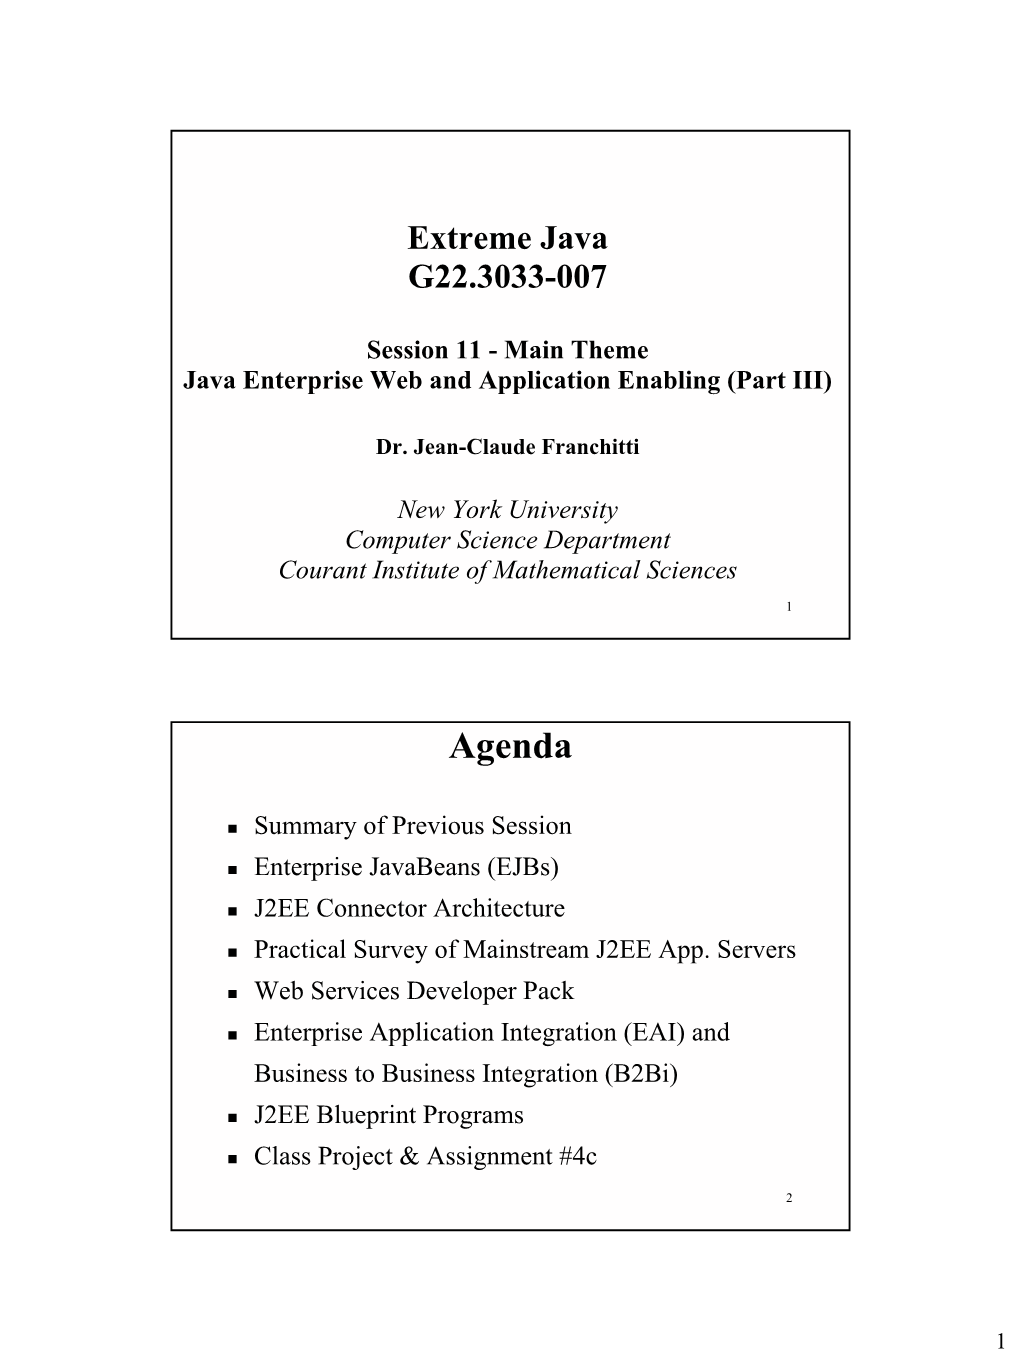 Session 11: Java Enterprise Web and Application Enabling (Part III)